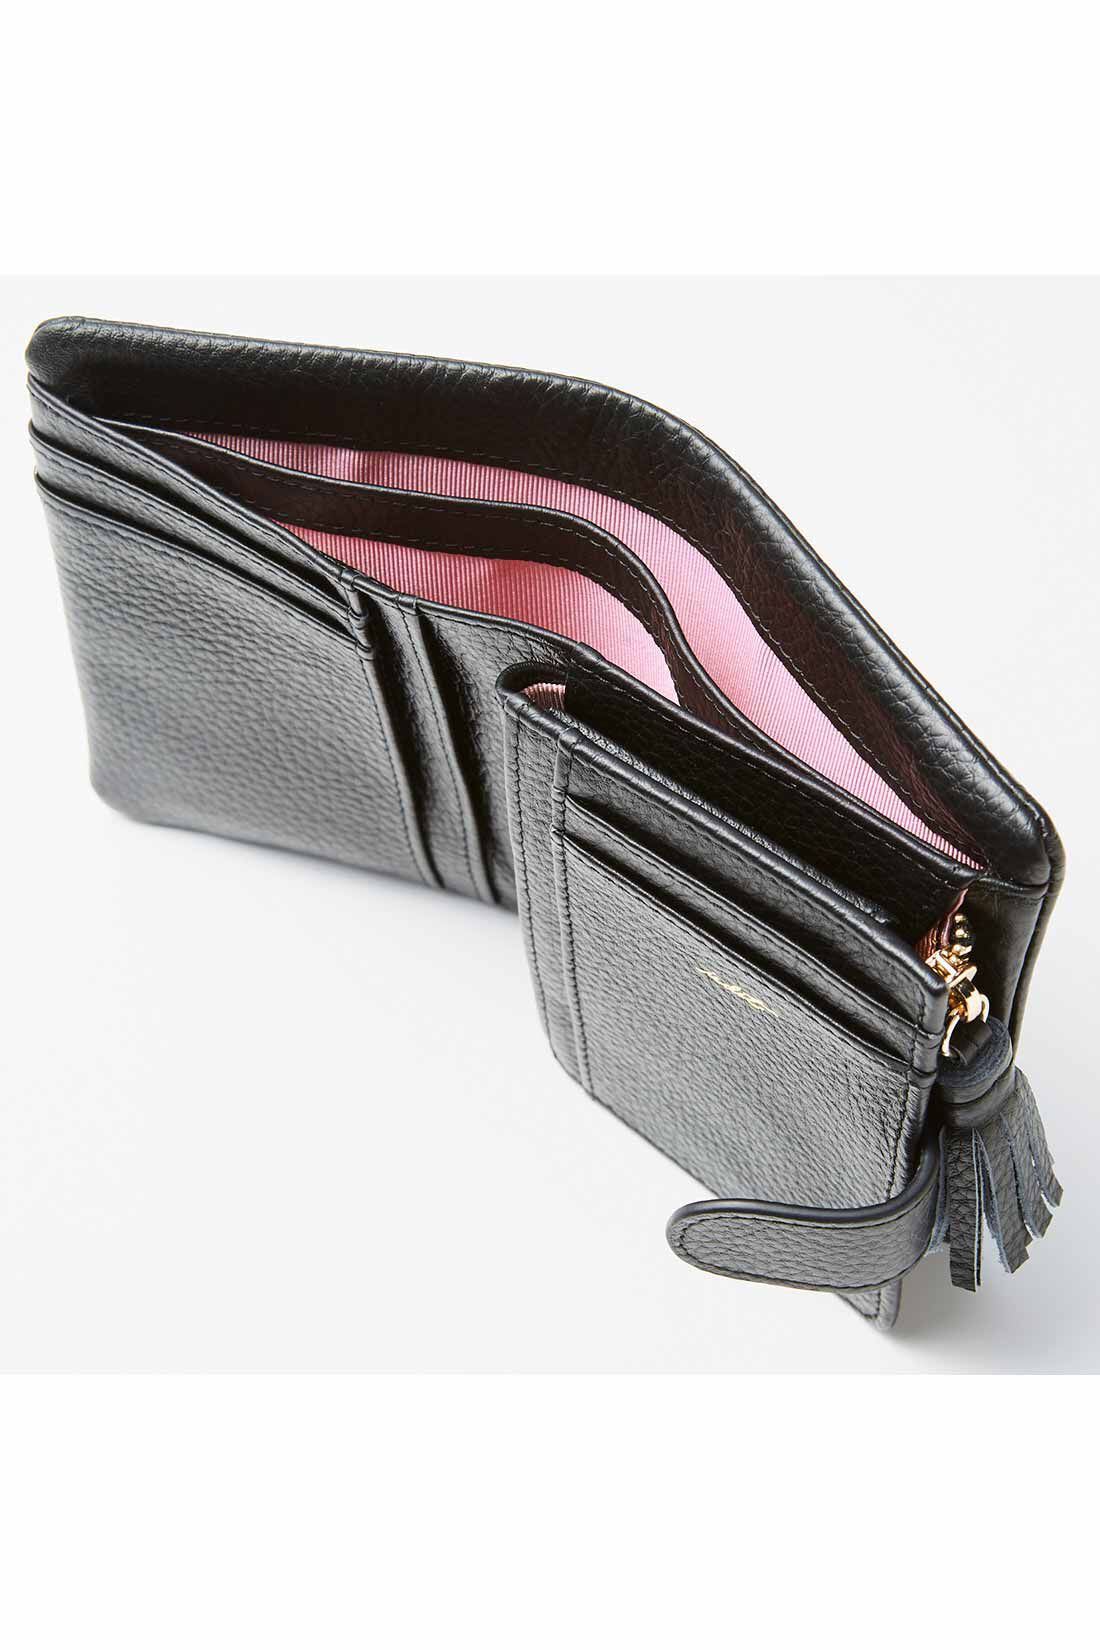 IEDIT[イディット]　くったり本革素材できれいめ二つ折り財布〈ブラック〉|2部屋に分かれたお札入れは、レシートの整理にも。